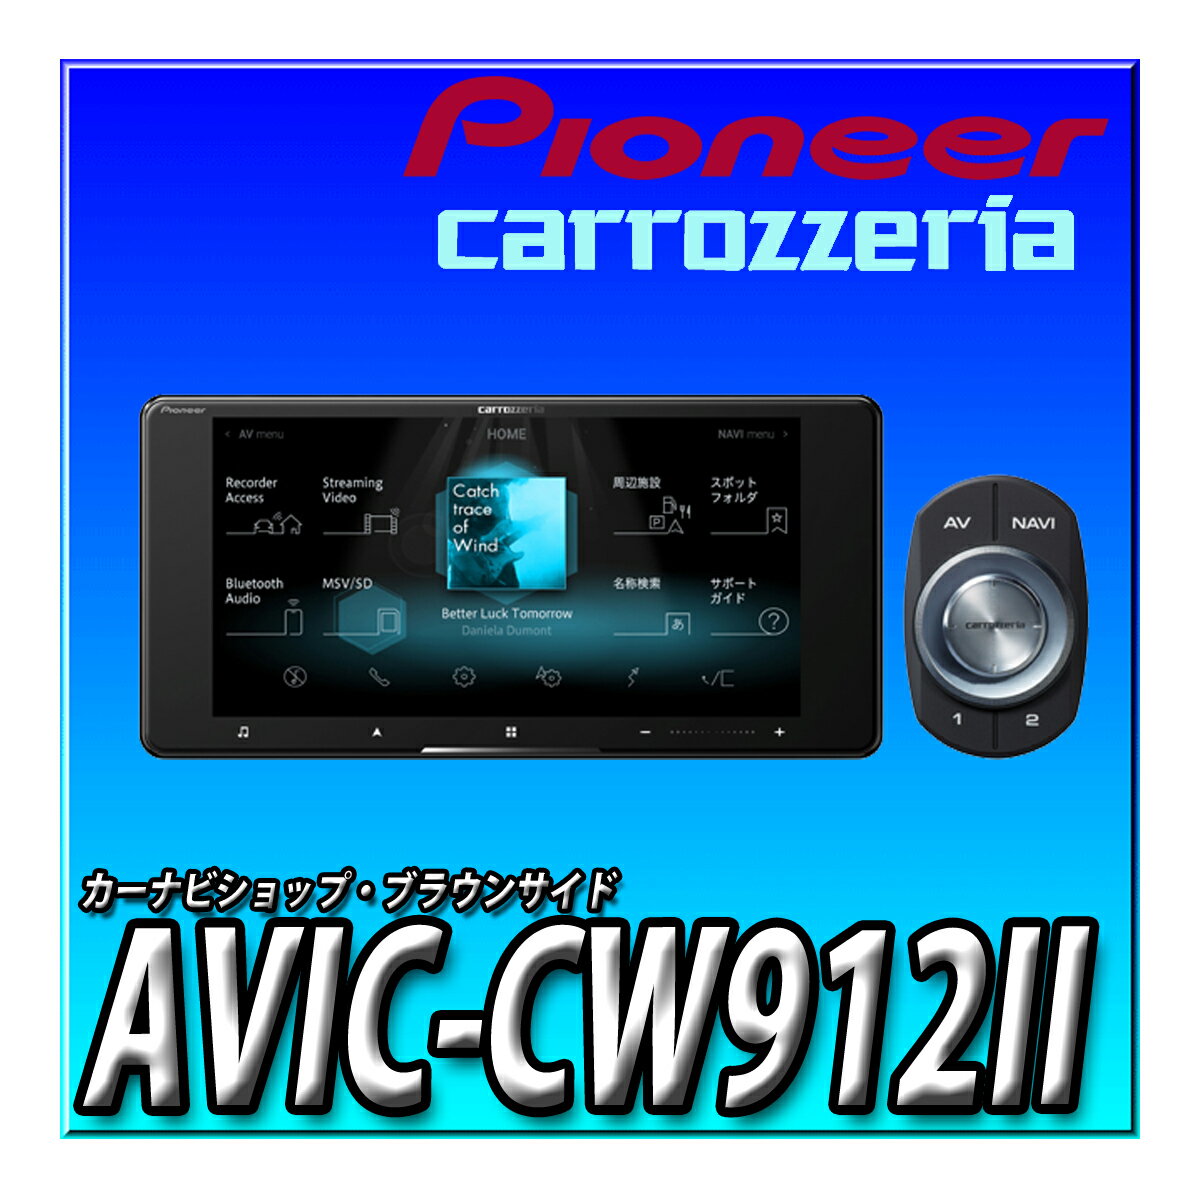 AVIC-CW912II パイオニア カーナビ 7インチ 200mmワイド サイバーナビ 無料地図更新 フルセグ DVD CD B..